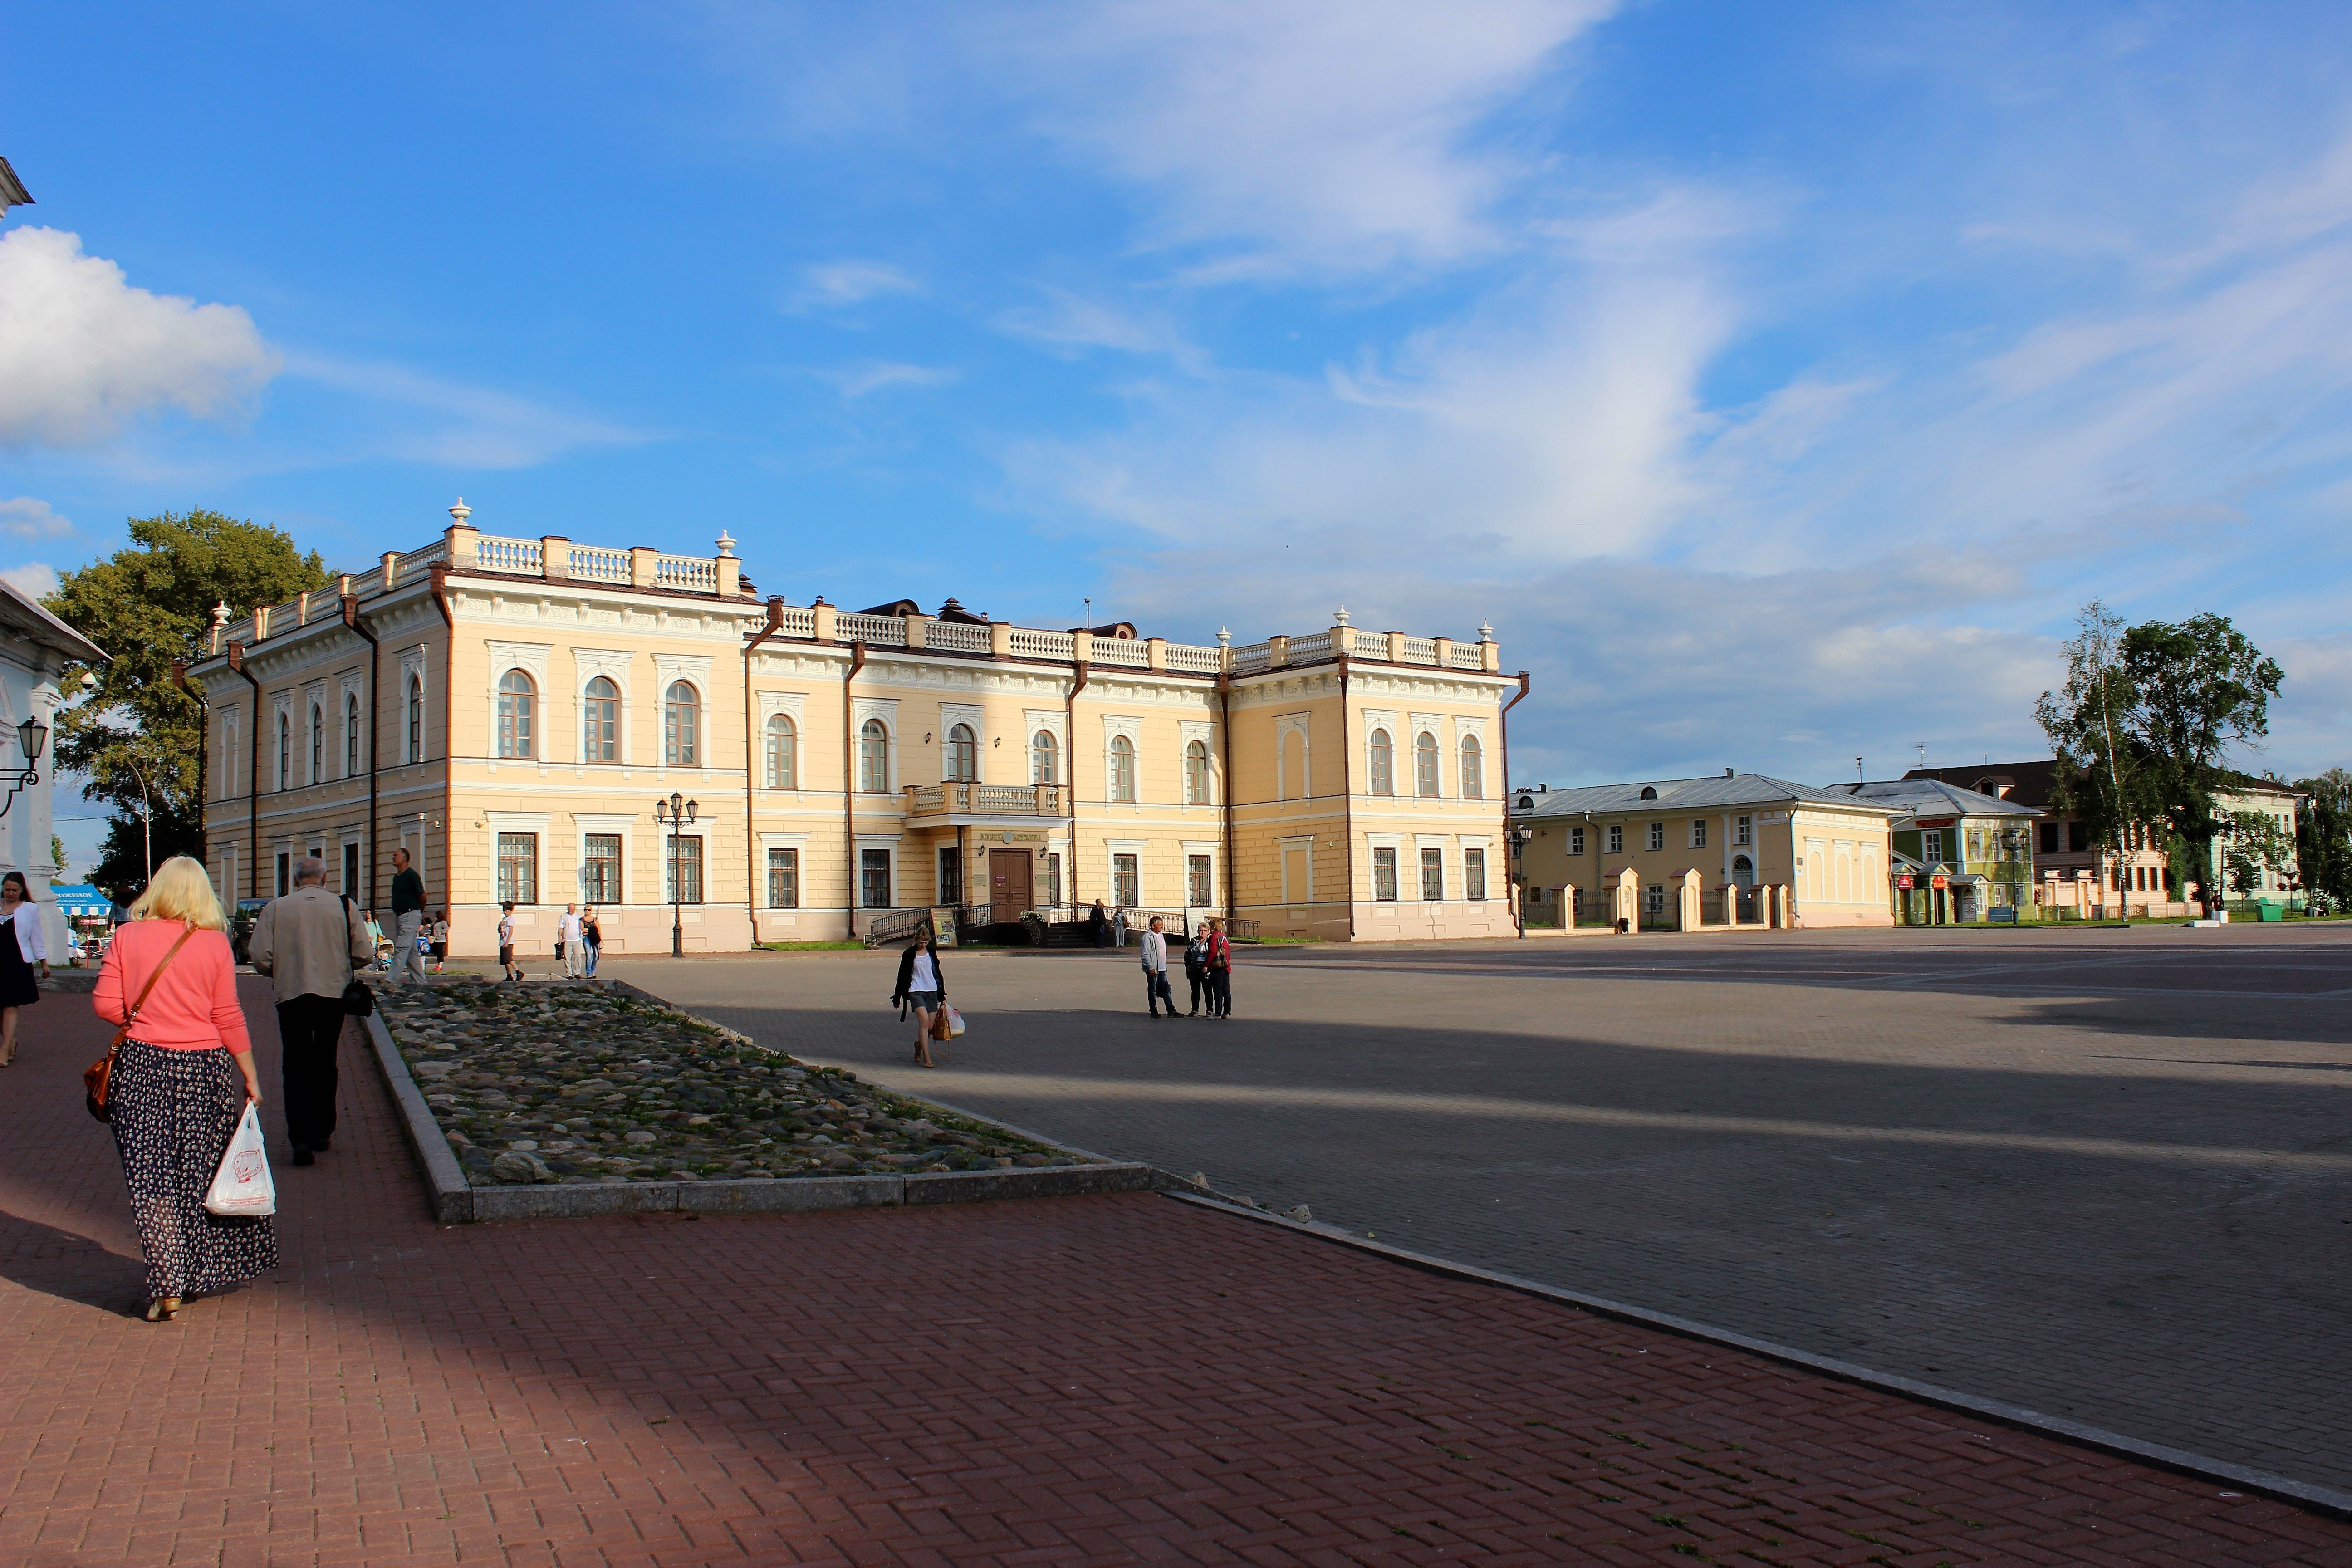 Музей кружева Вологда